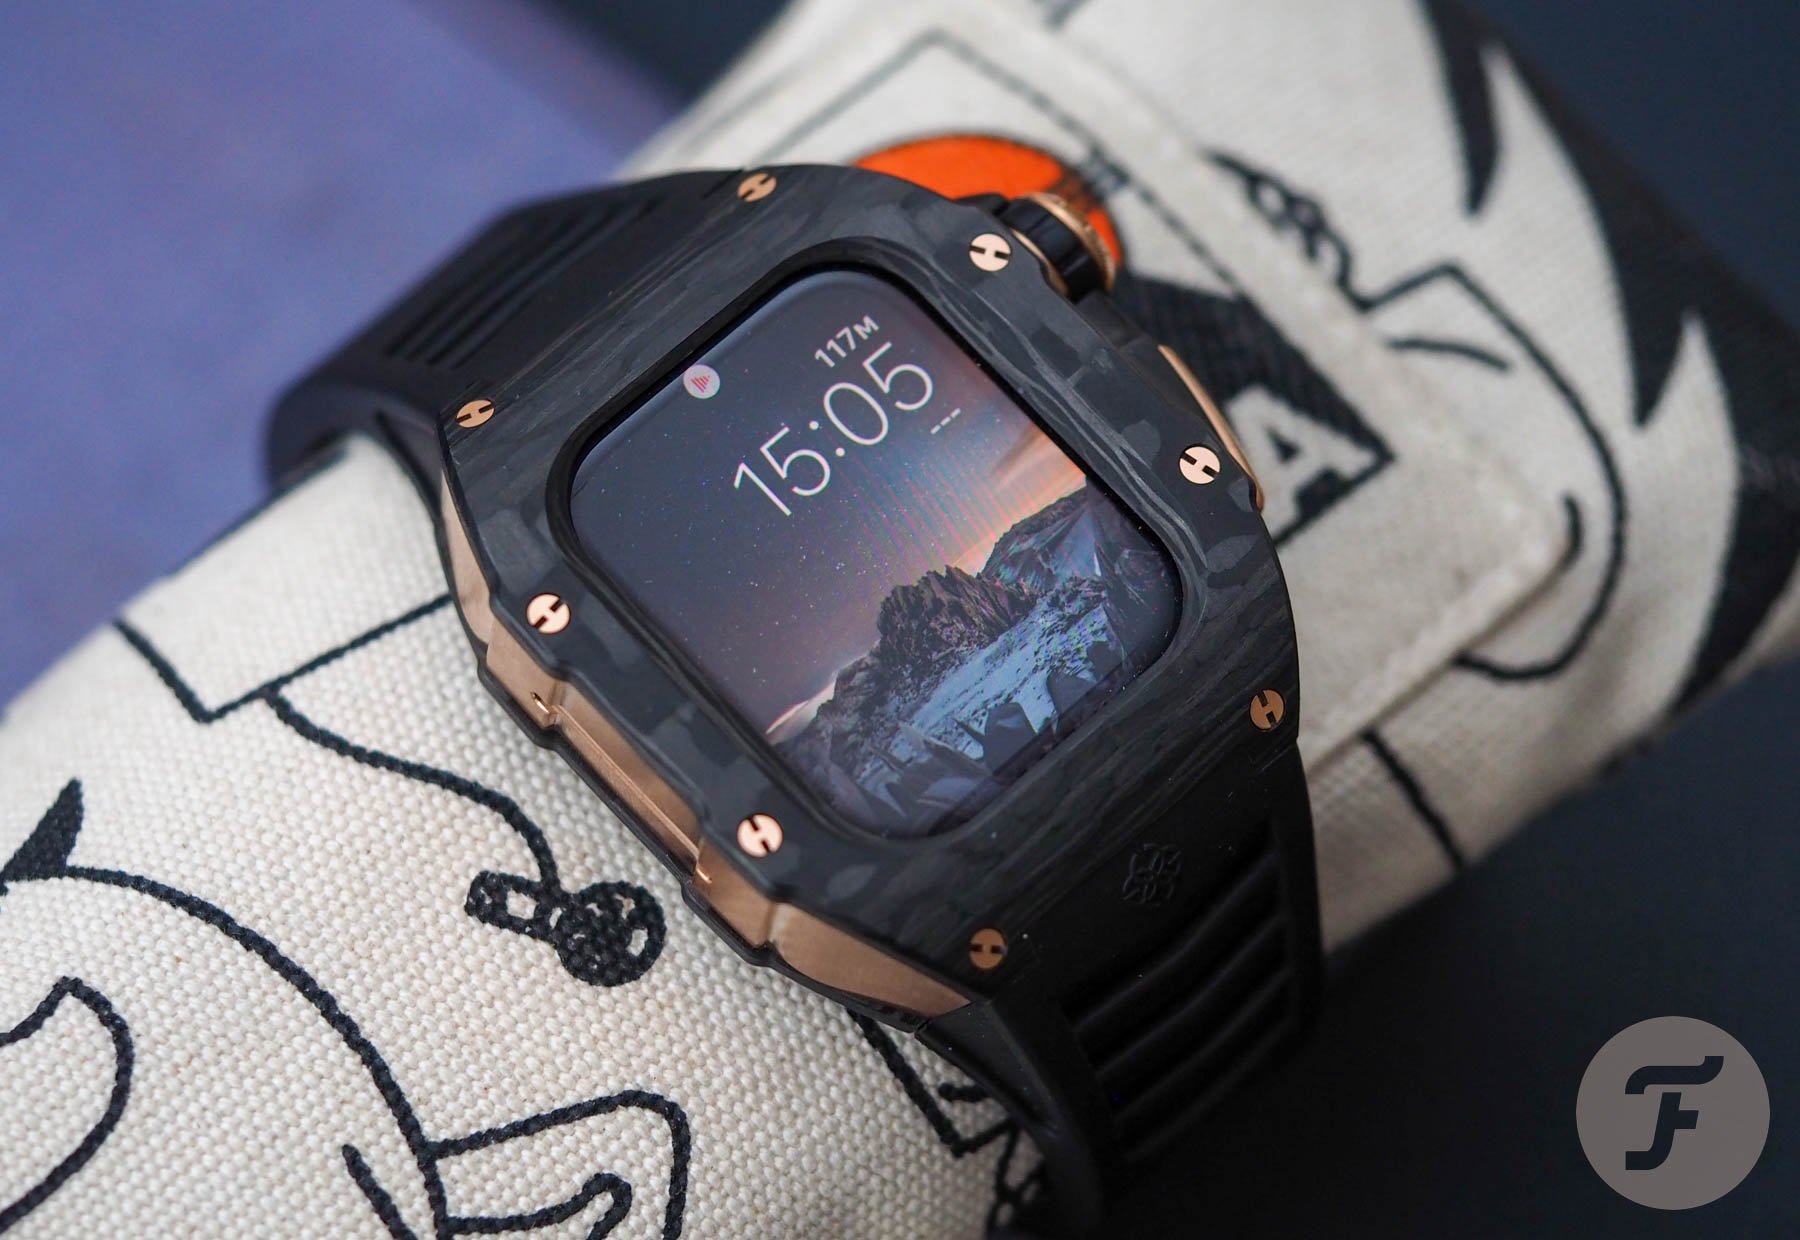 F】 Golden Concept Apple Watch Case RSC Onyx Black — Hands-On